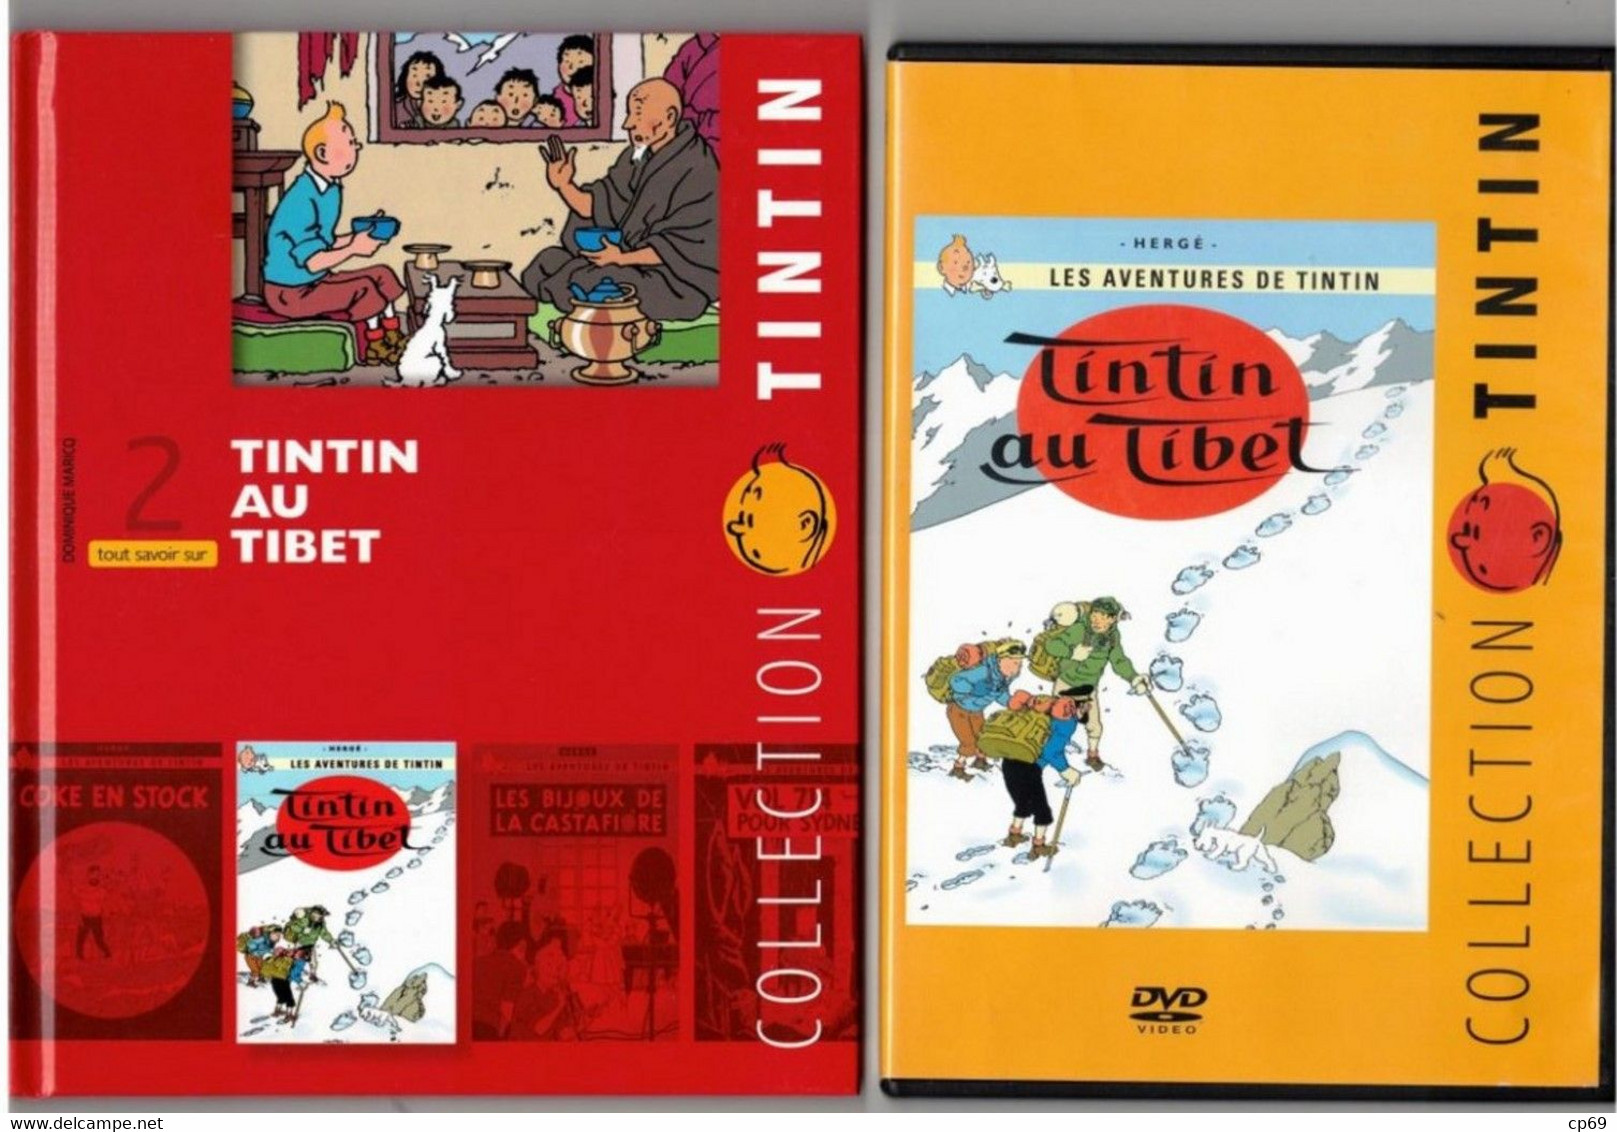 Tintin Hergé / Moulinsart 2010 Milou Chien Dog Cane Tintin Au Tibet Capitaine Haddock N°2 DVD + Livret Explicatif B.Etat - Dessin Animé